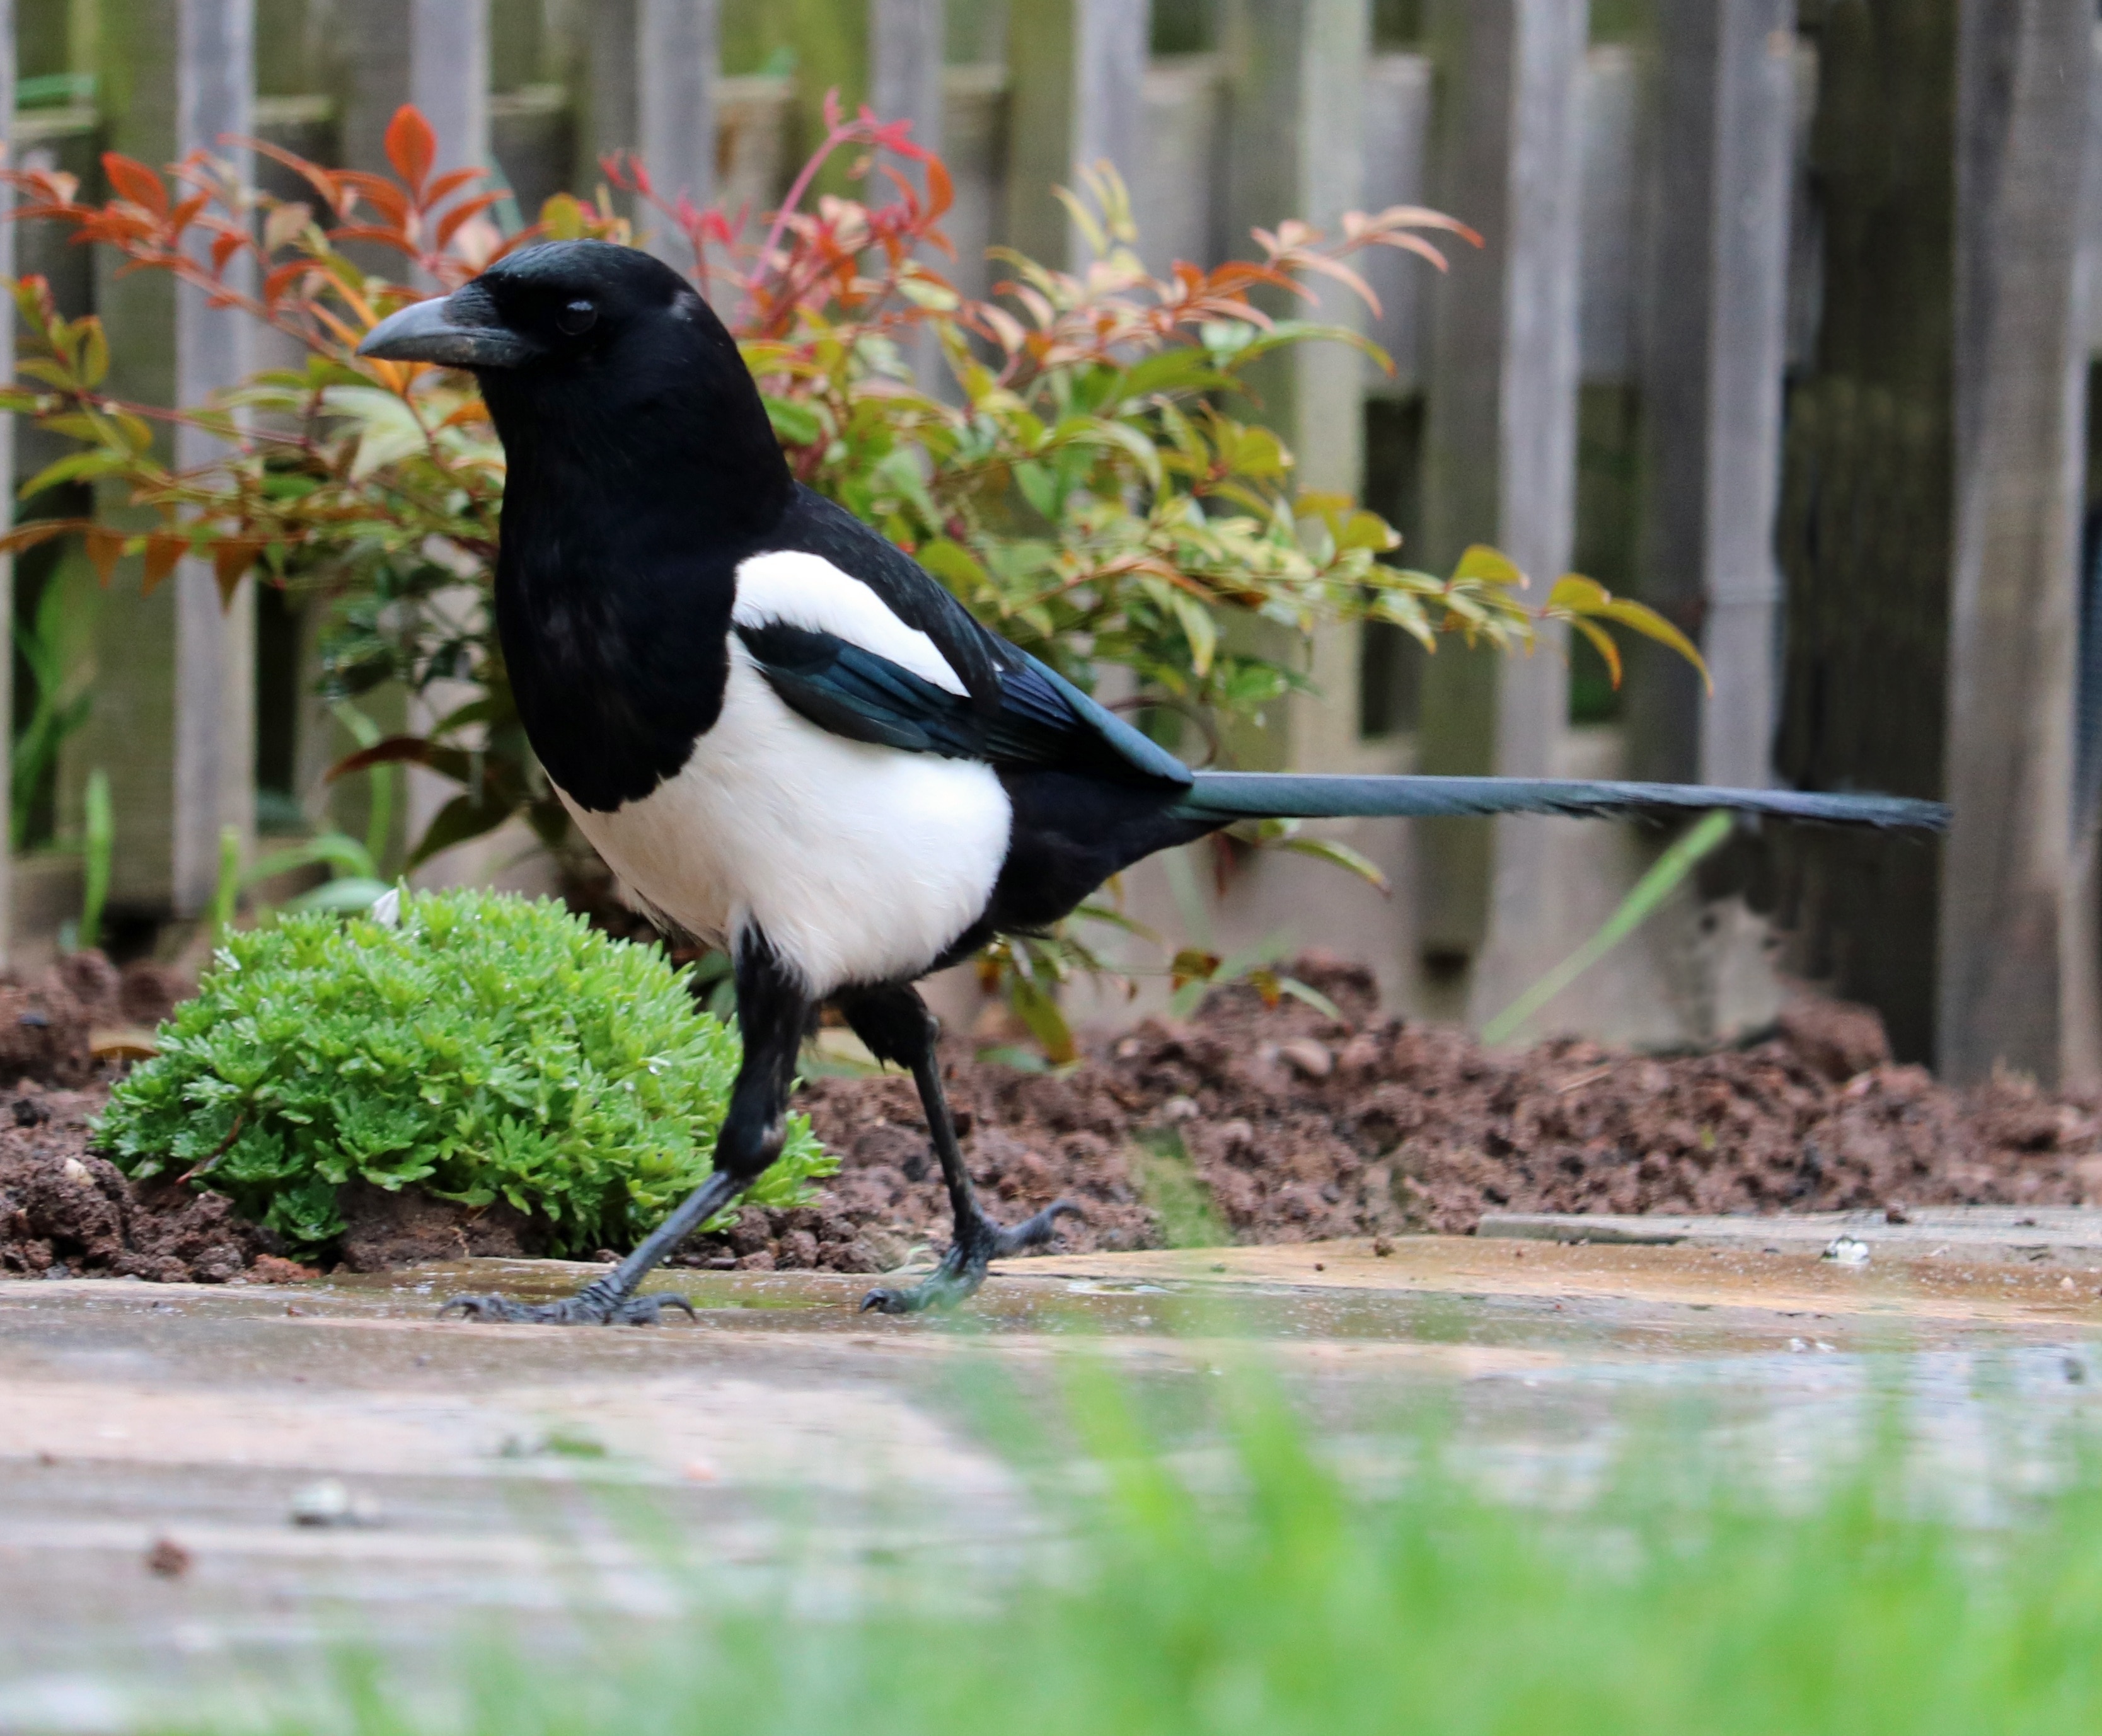 white and black bird walking on brown ground